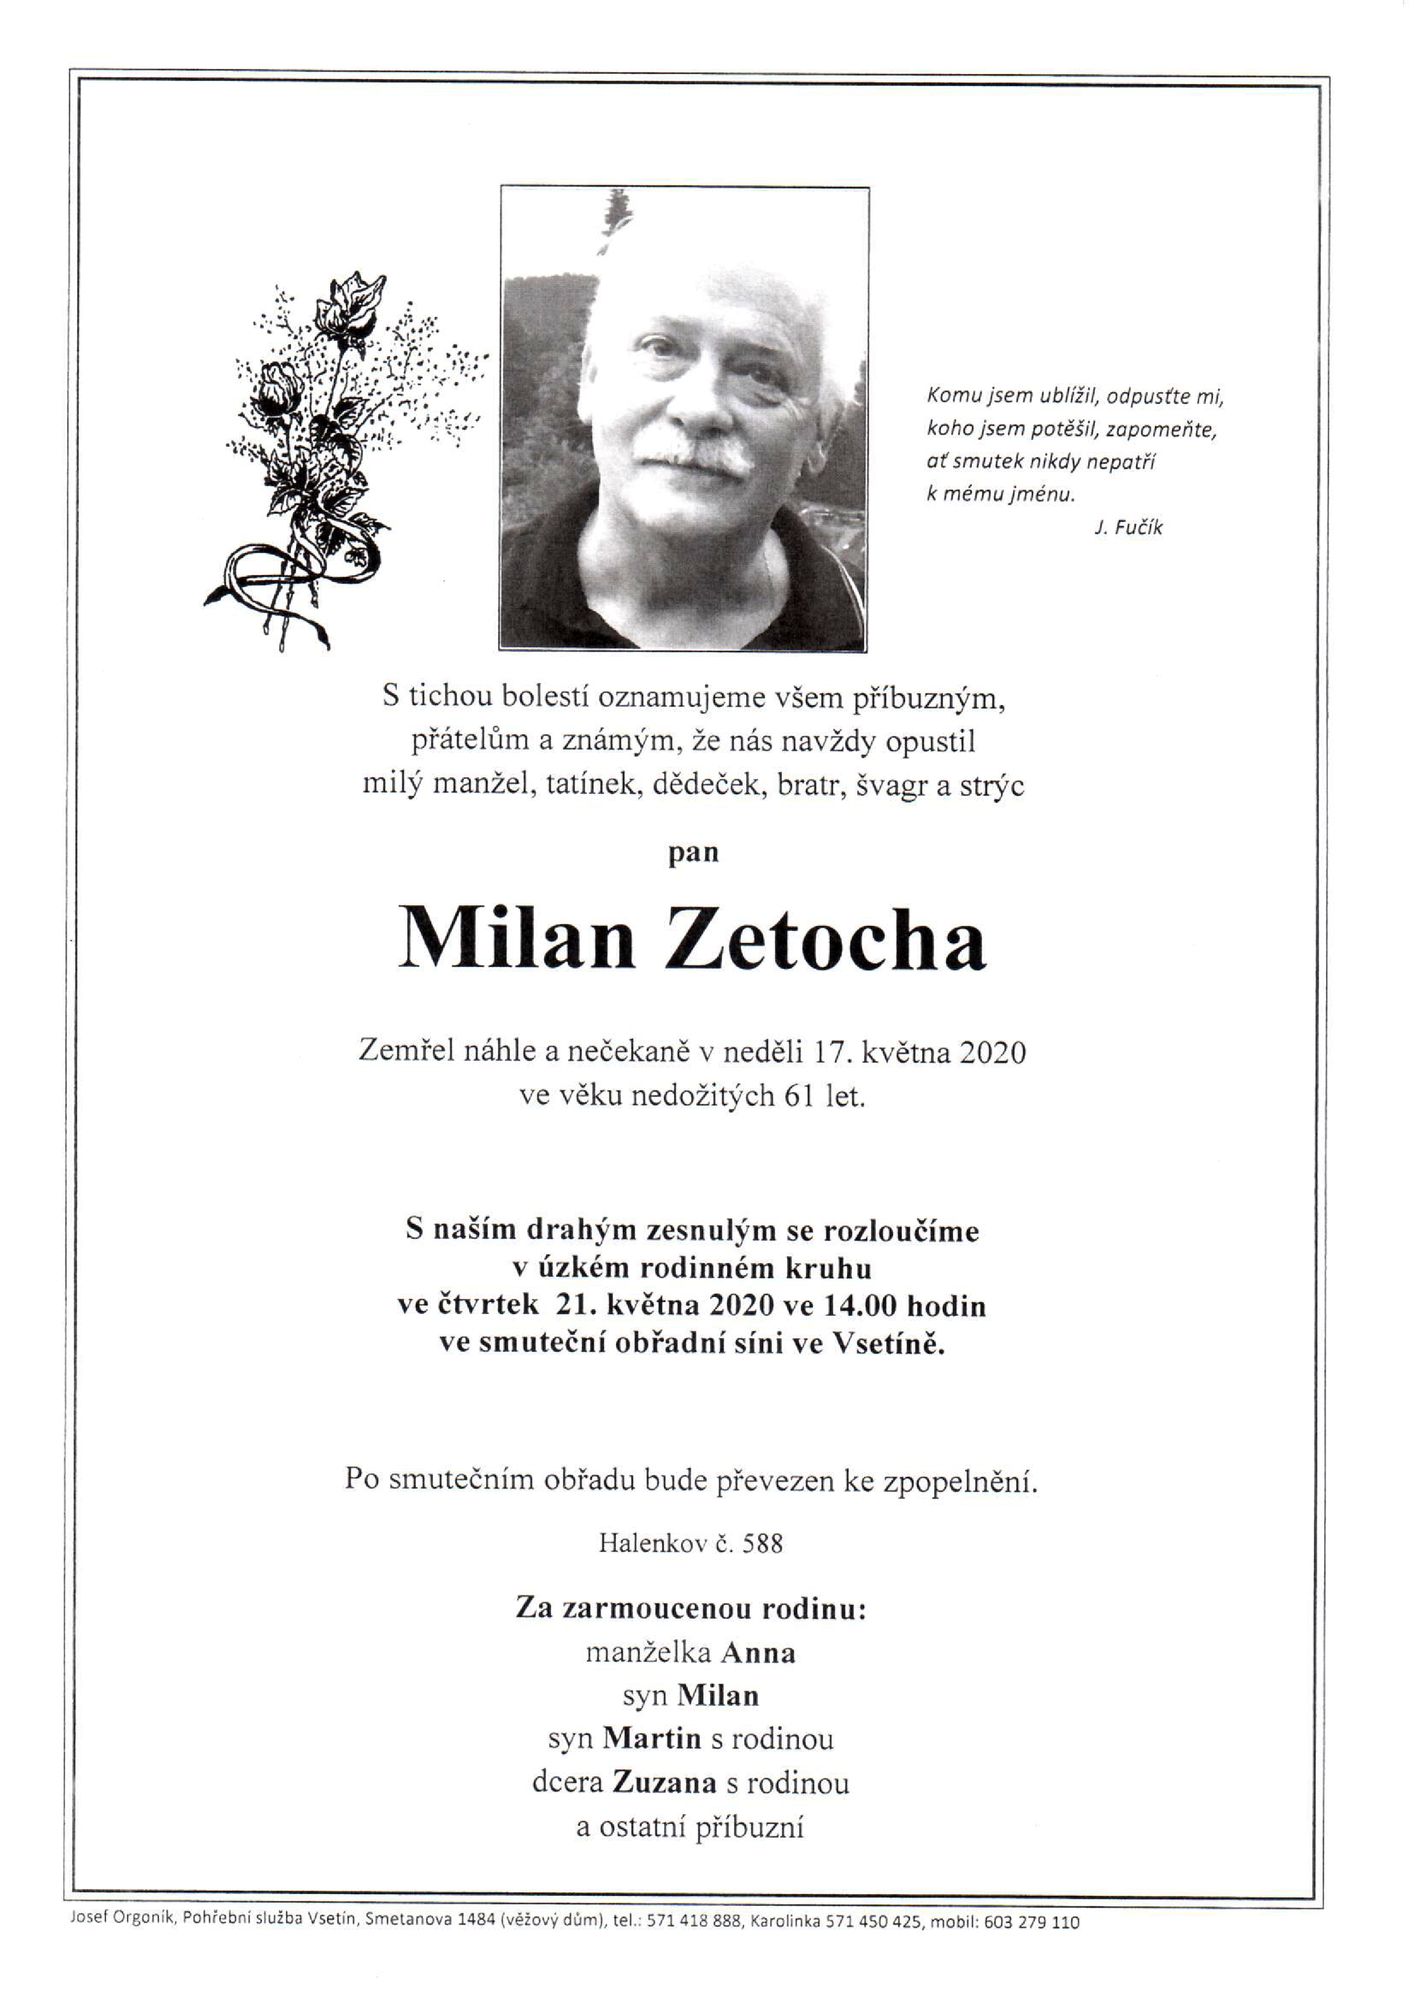 Milan Zetocha